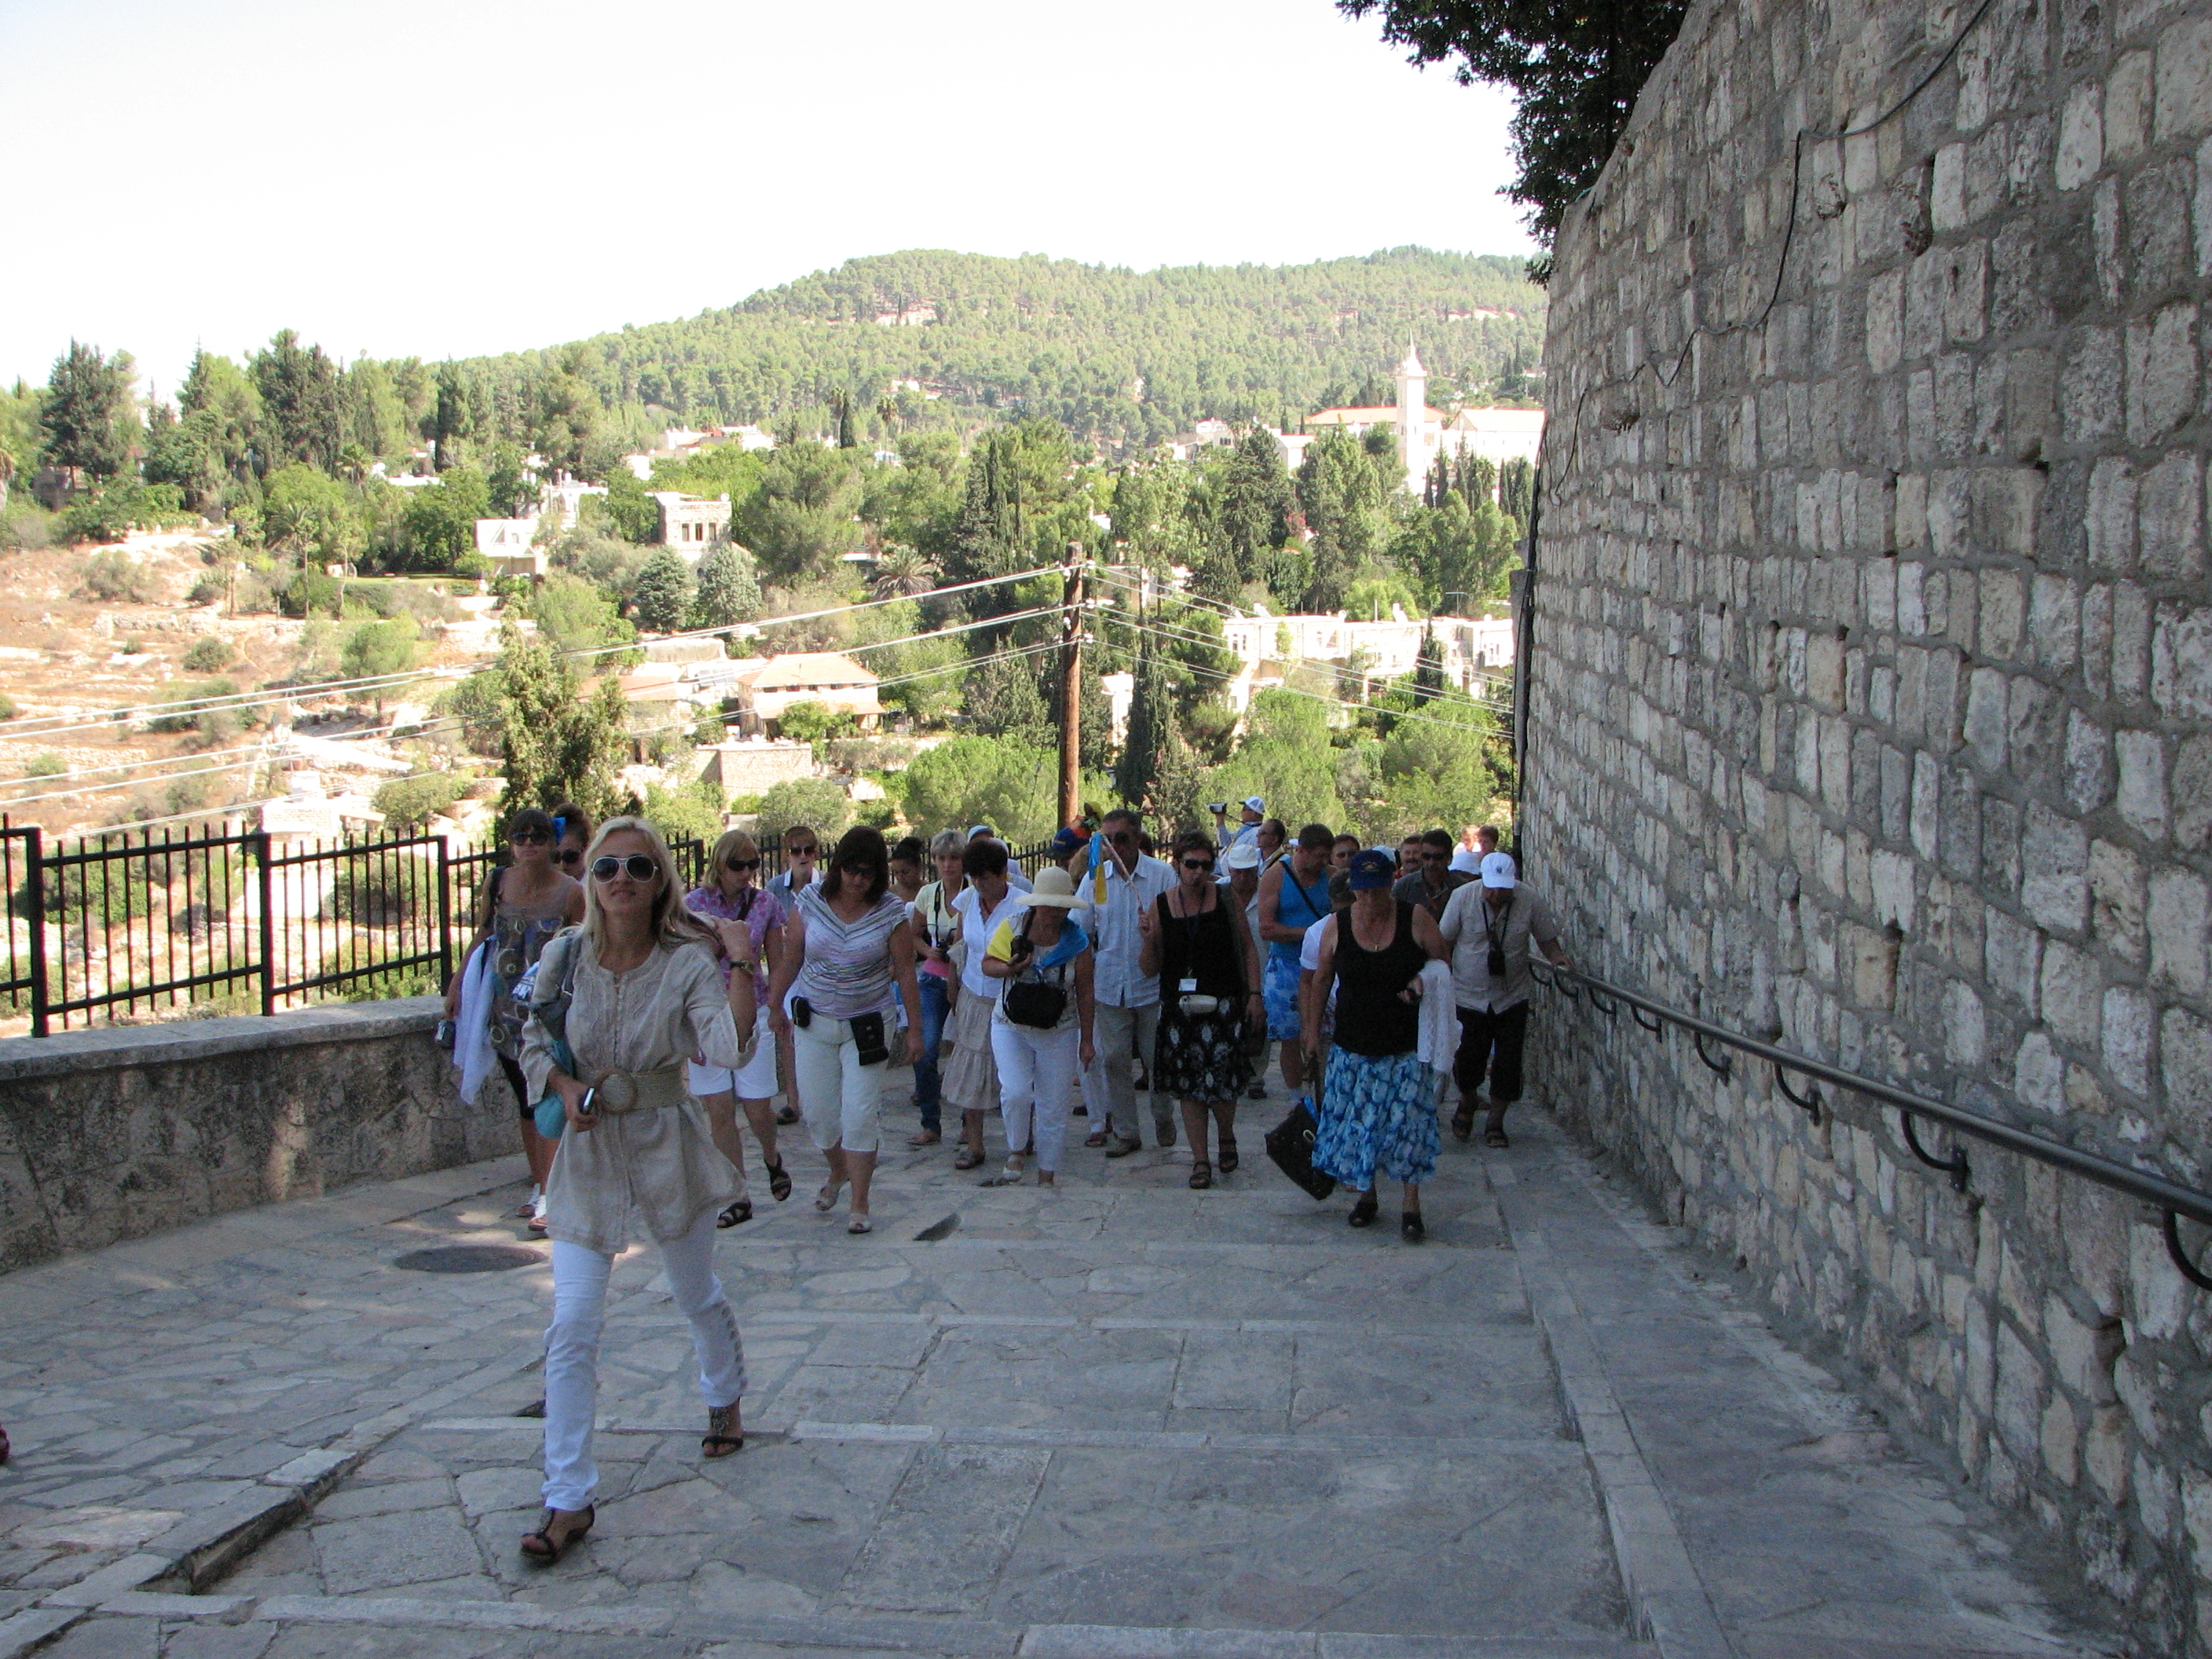 Christian pilgrims in Jerusalem, Israel, 2011, photo 8